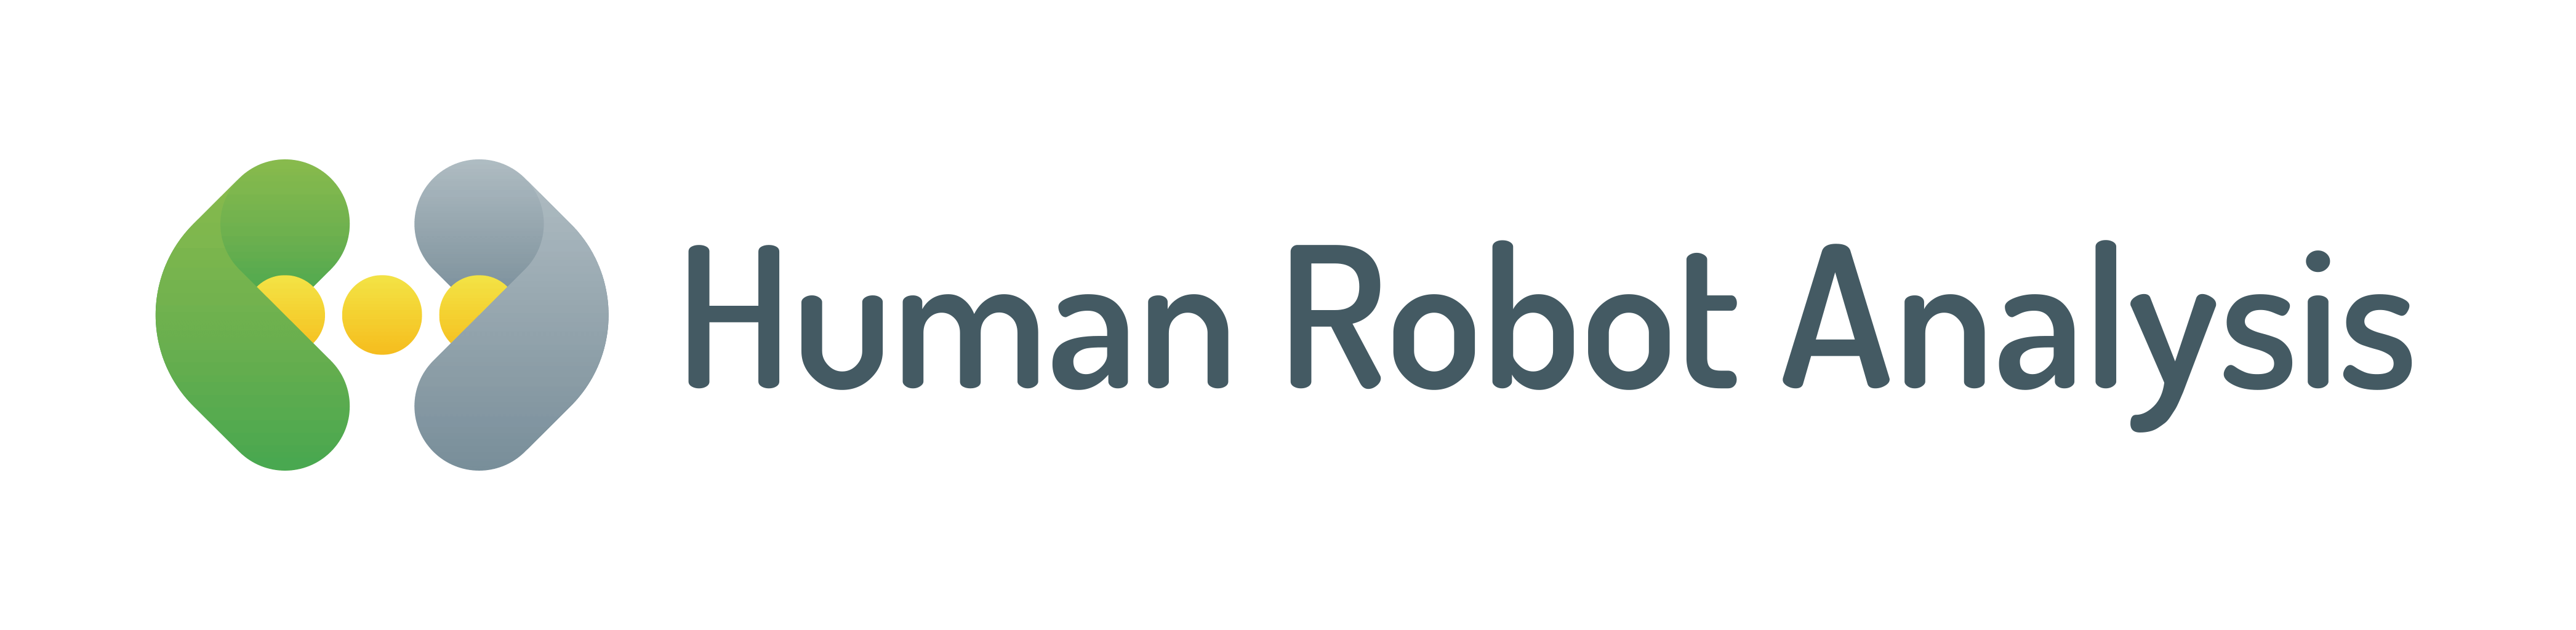 Human Robot Analysis